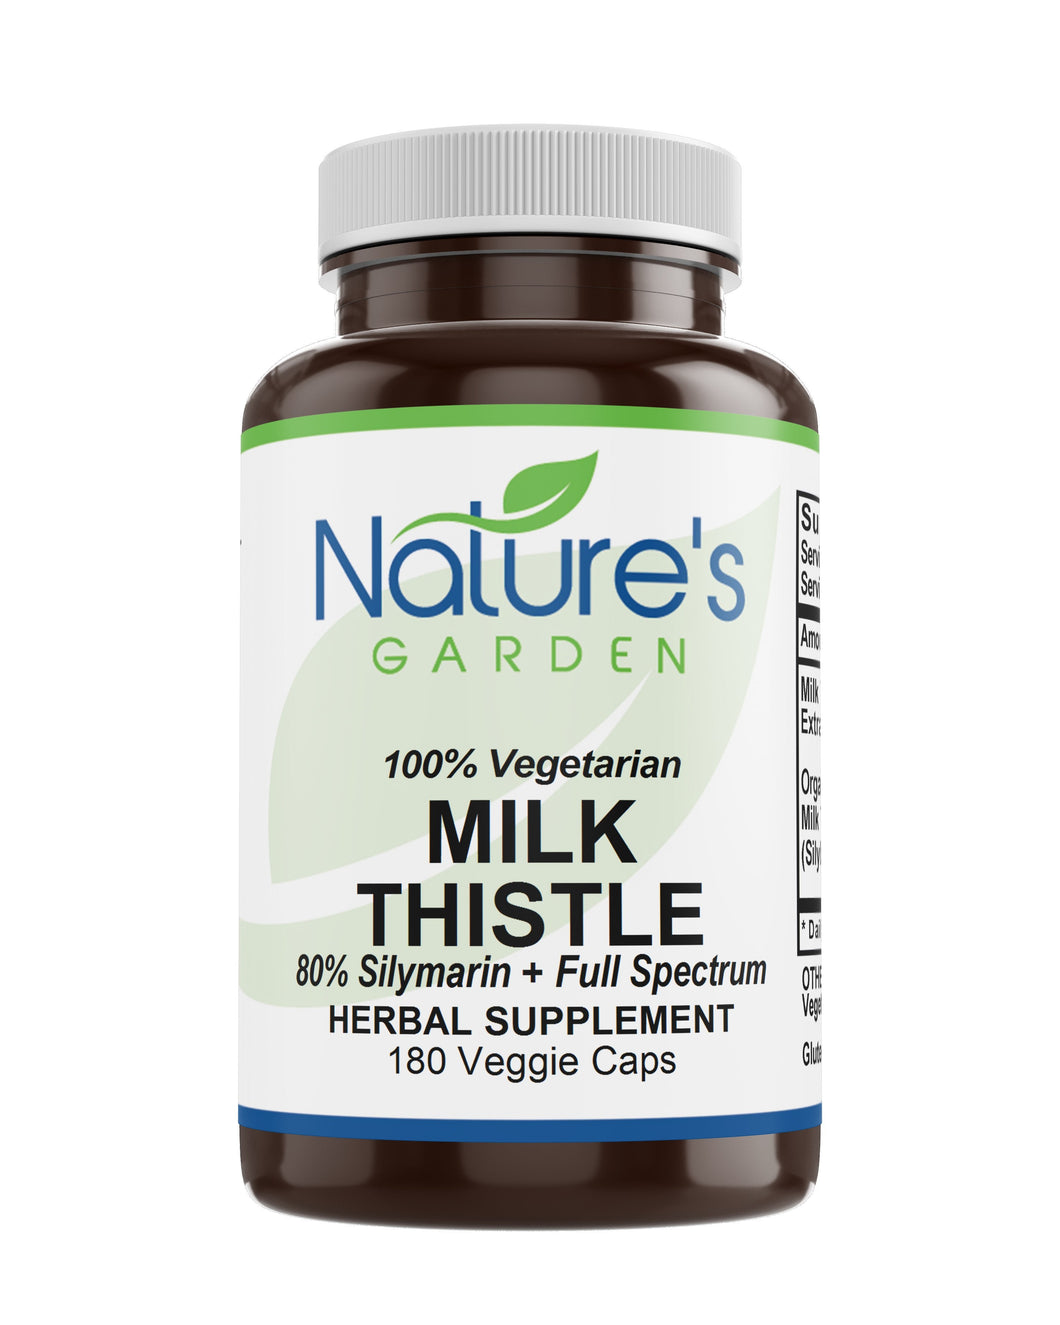 Milk Thistle - 180 Veggie Caps with Organic Milk Thistles and Potent Silymarin Extract